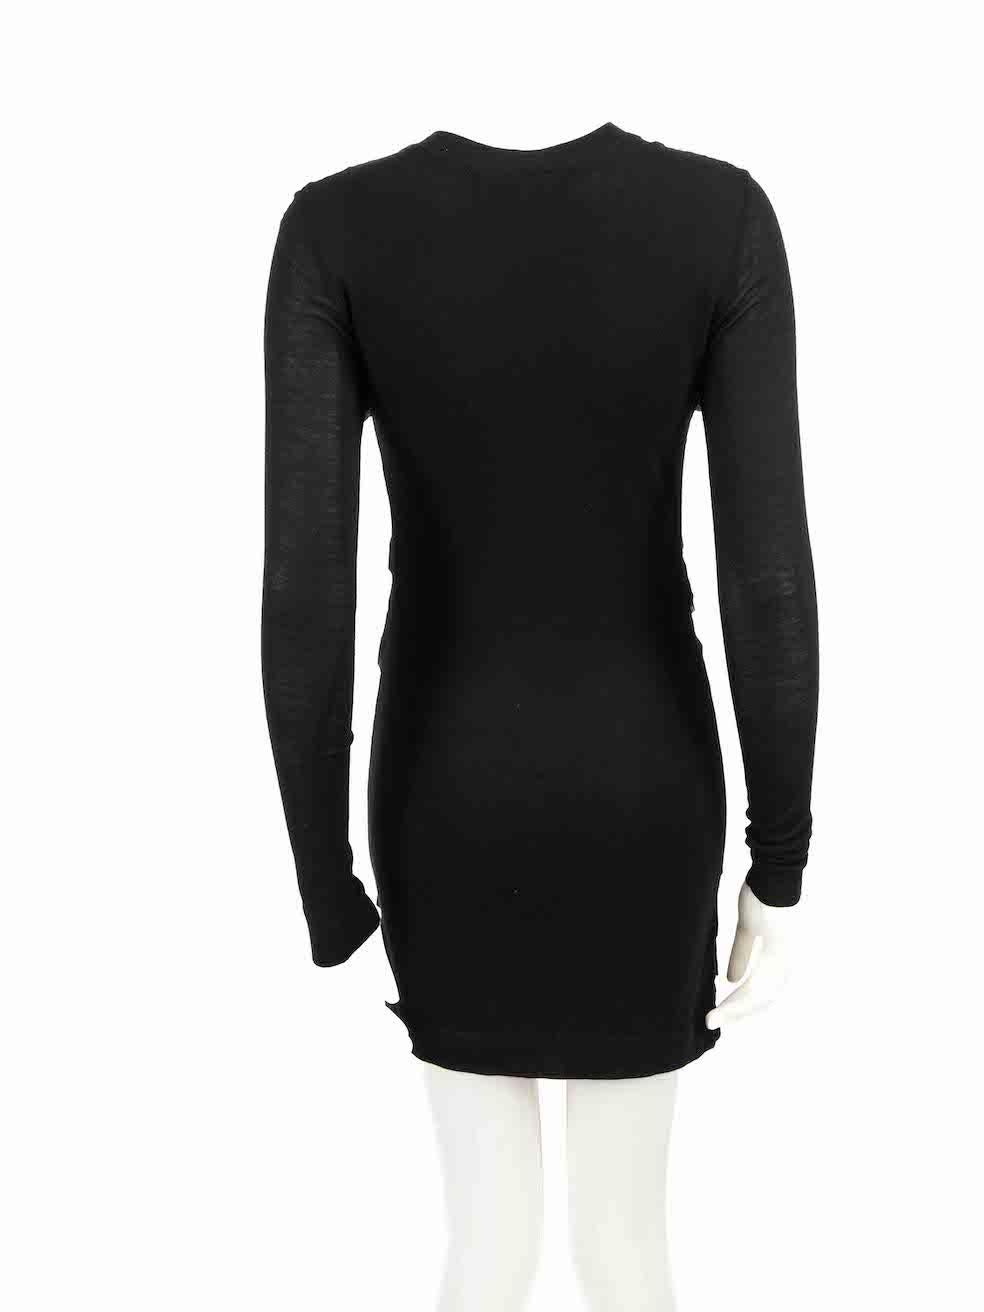 Diane Von Furstenberg Black Ruffled Mini Dress Size S In Good Condition For Sale In London, GB